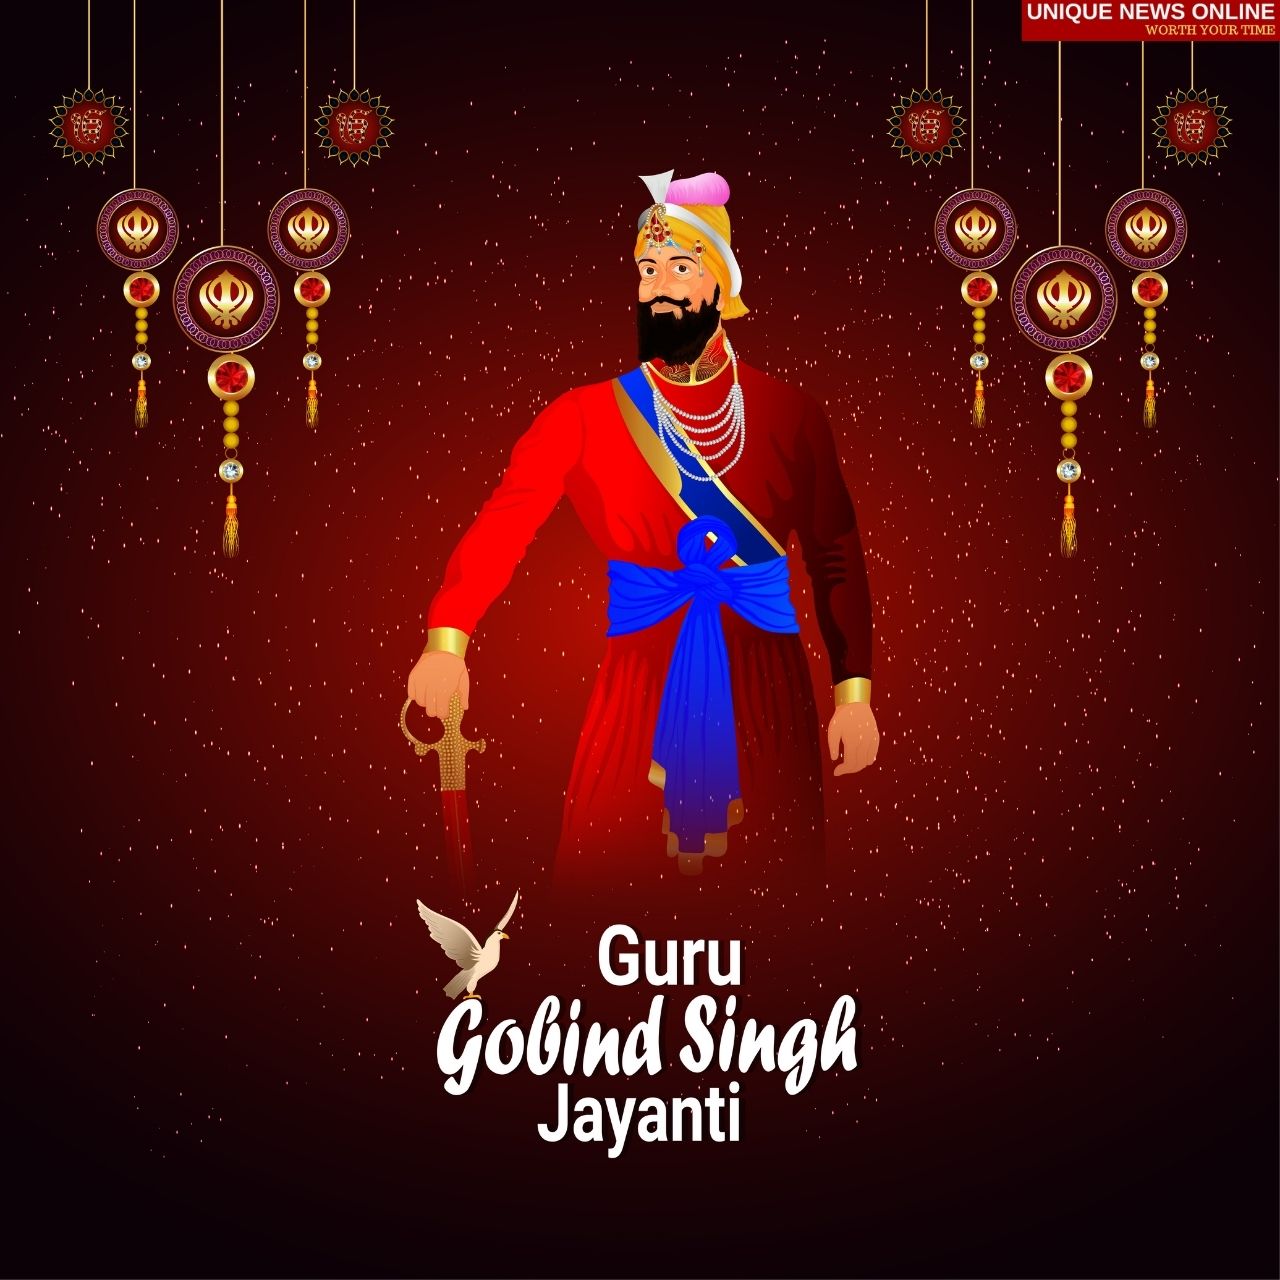 Guru Gobind Singh Jayanti 2022: تنزيل فيديو حالة WhatsApp لتحية أحبائك على 356th Guru Gobind Singh Prakash Parv